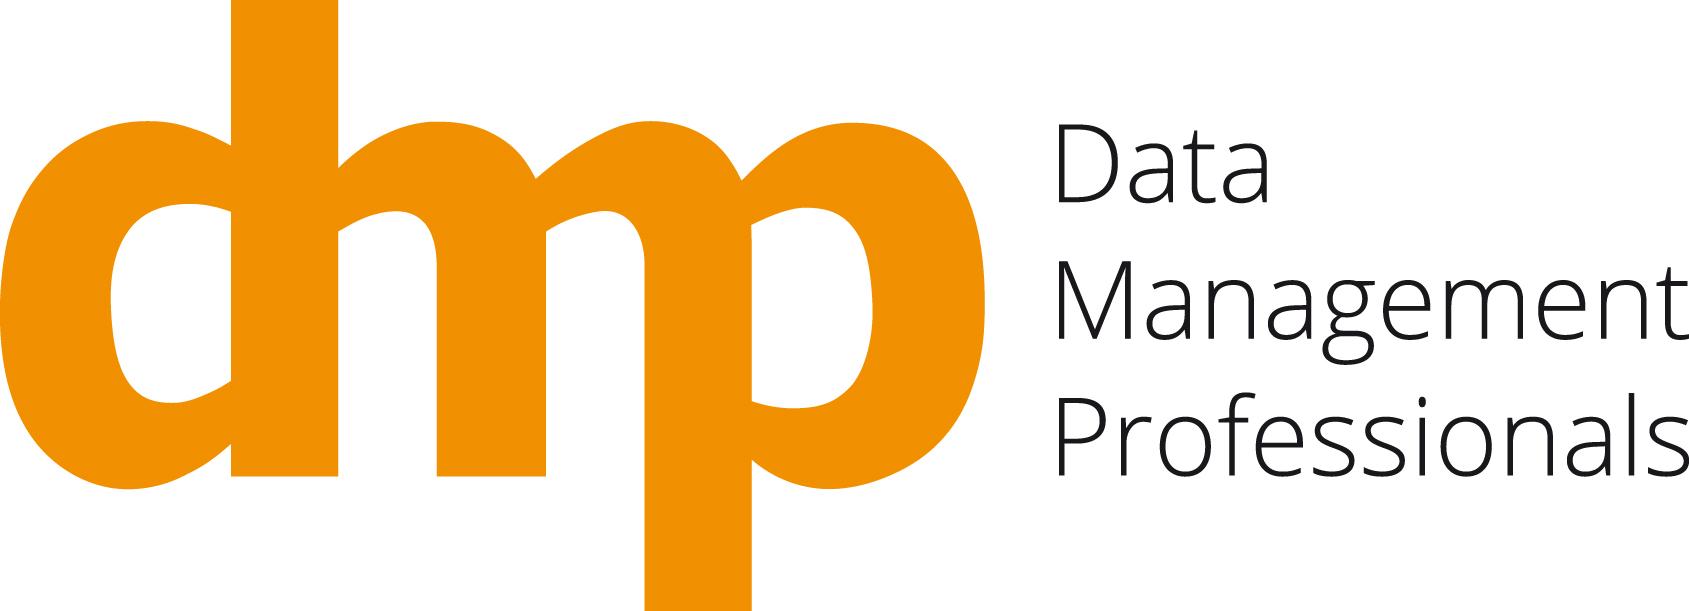 DMP logo